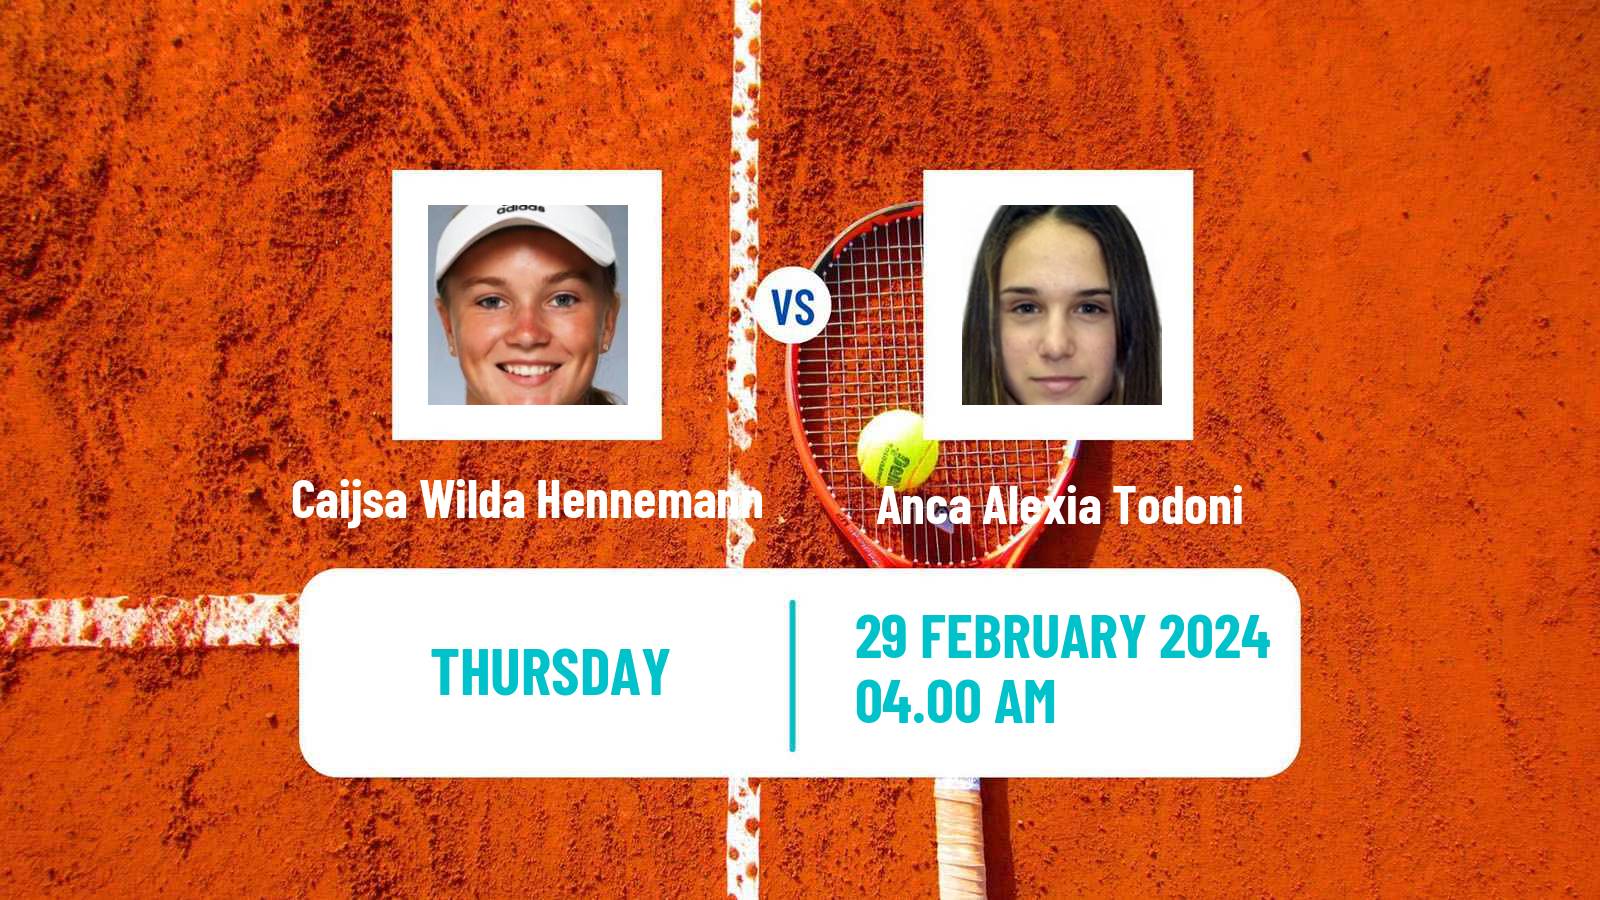 Tennis ITF W35 Helsinki Women Caijsa Wilda Hennemann - Anca Alexia Todoni